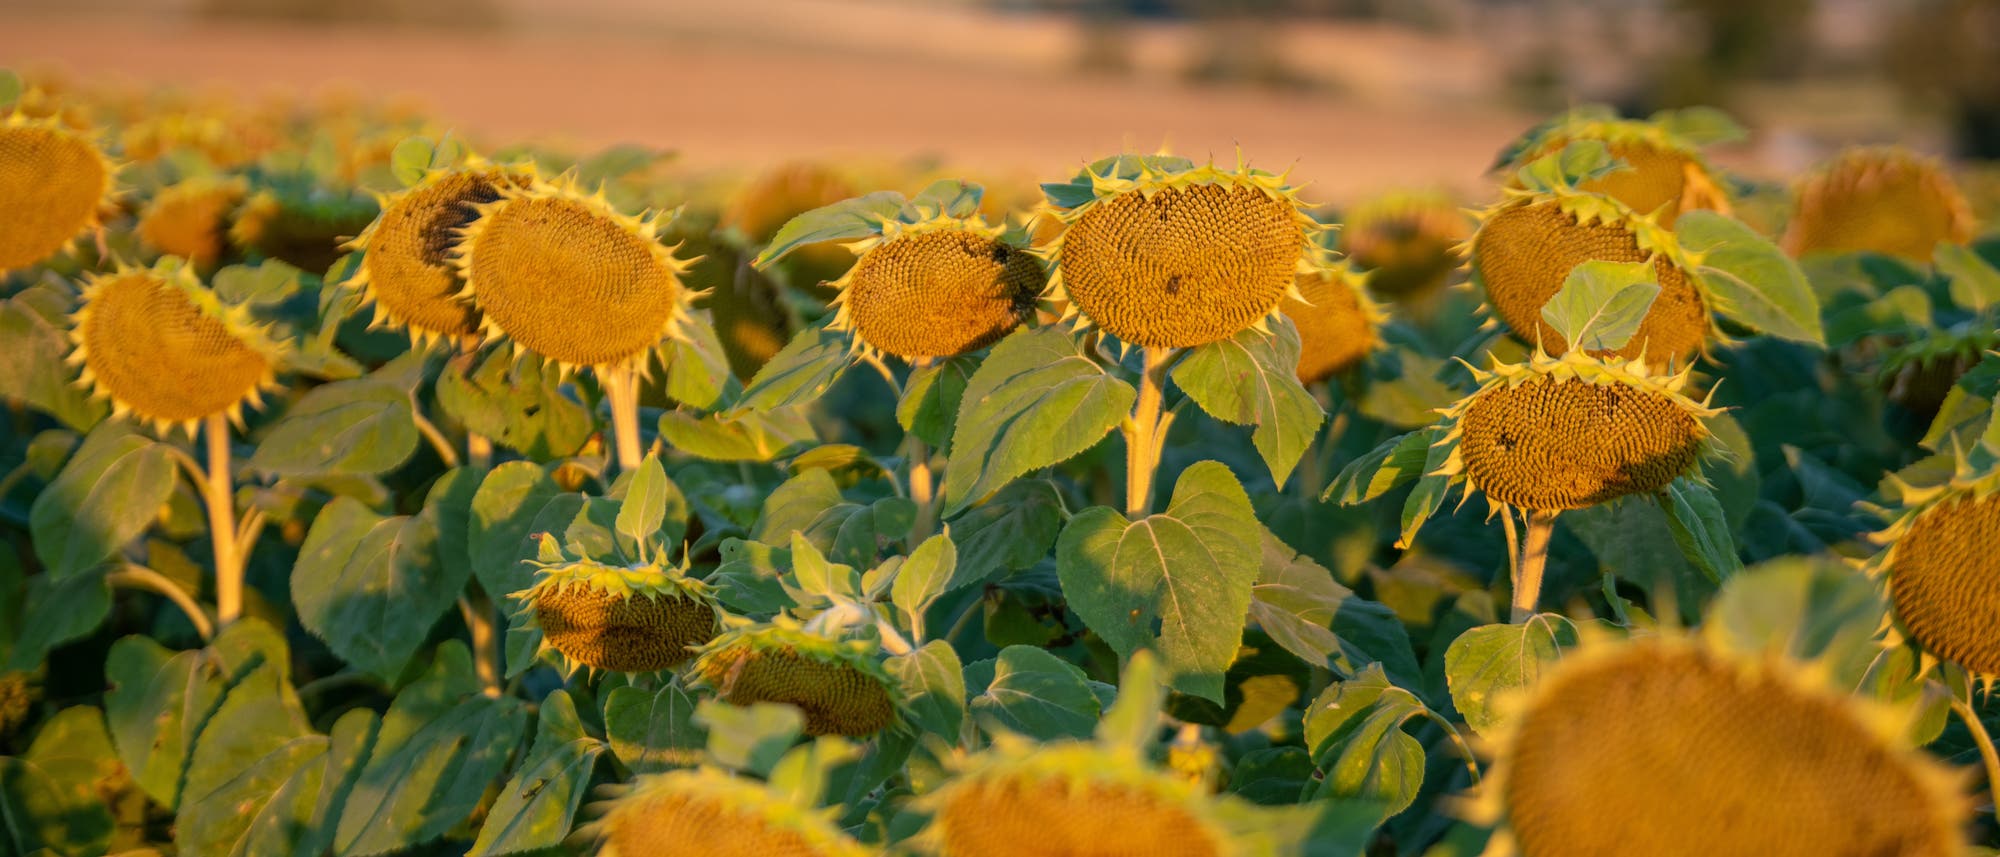 Sonnenblumen leiden unter Dürre in Bayern